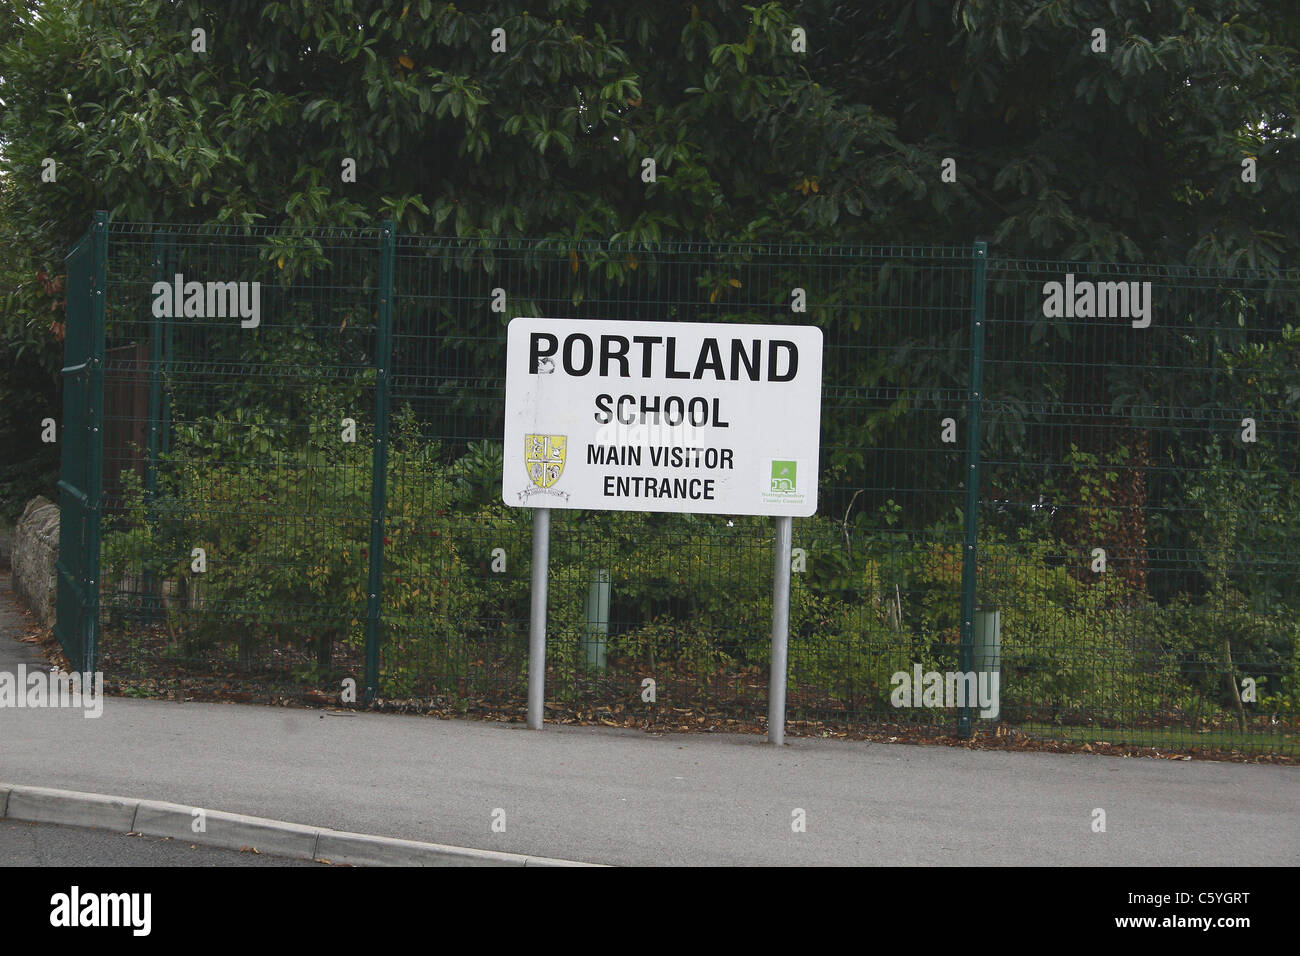 Portland School main visitor entrance sign. Worksop, Notts, England Stock Photo